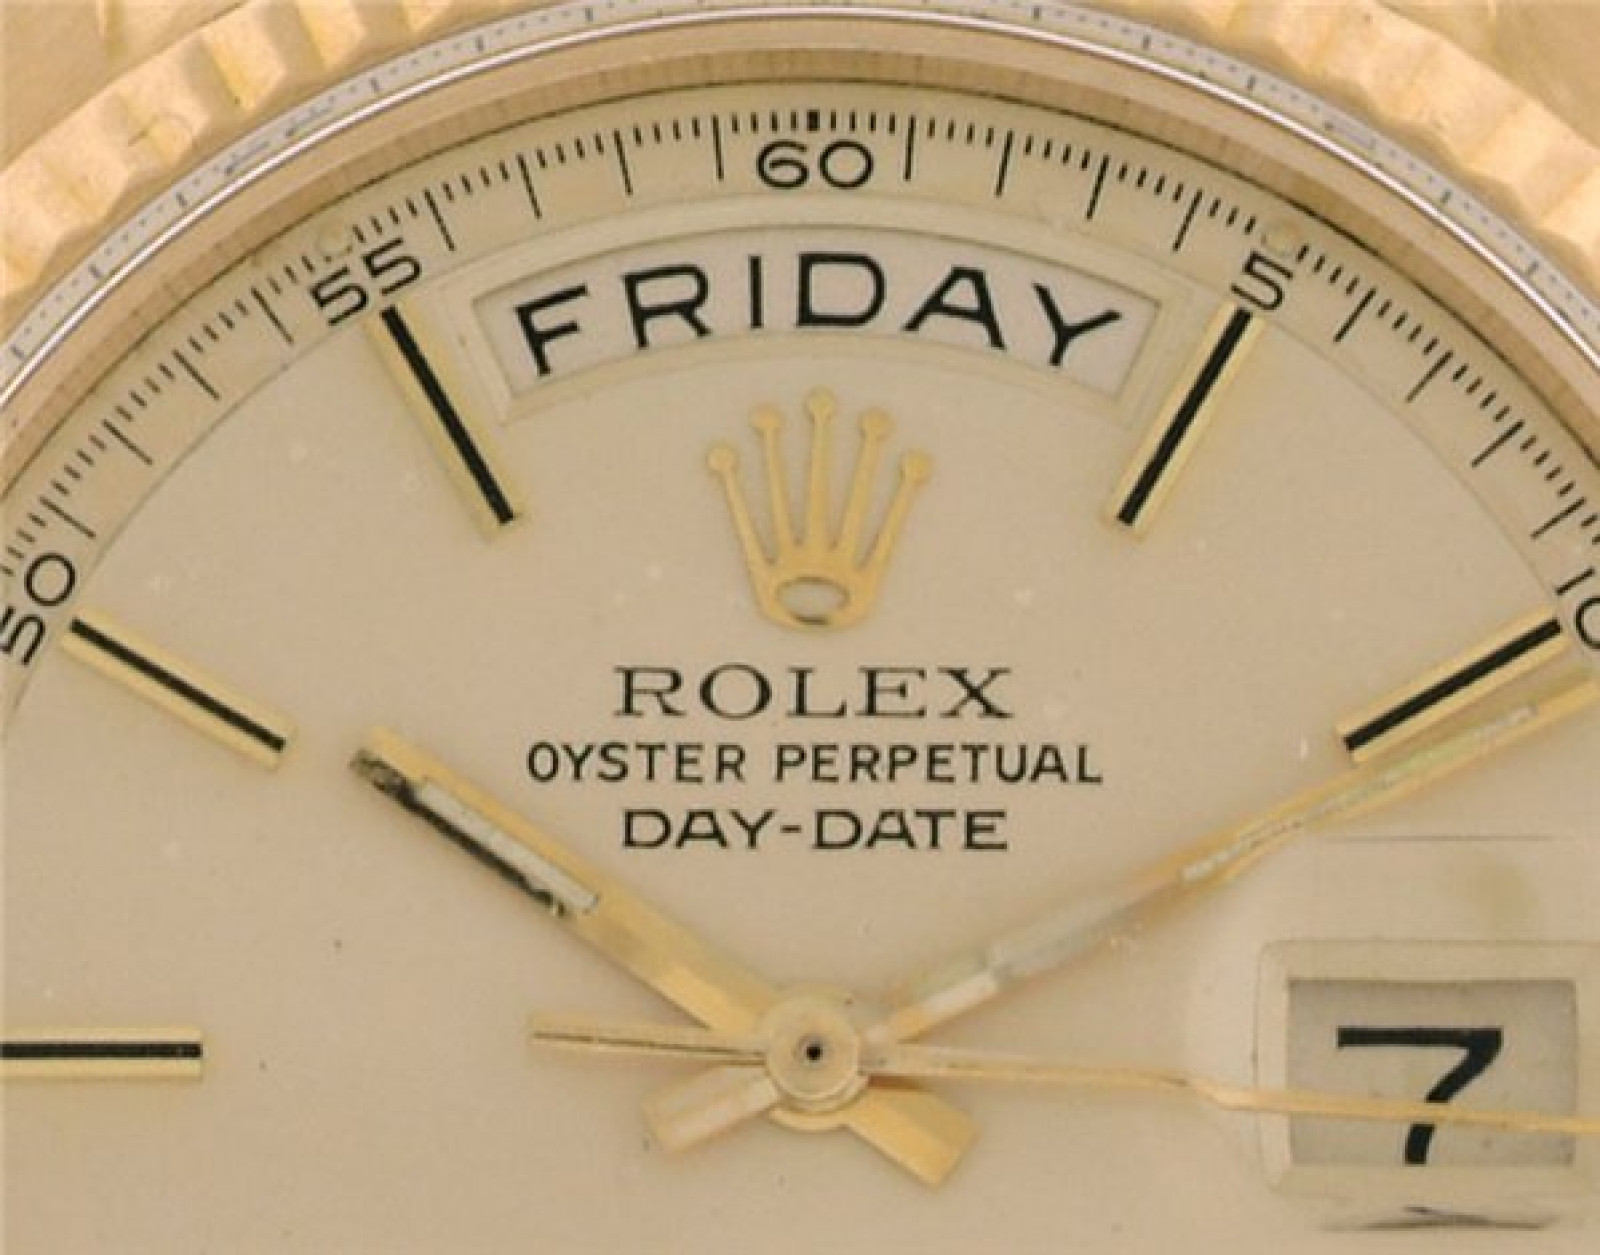 Vintage Rolex Day-Date 1803 Gold Year 1966 1966